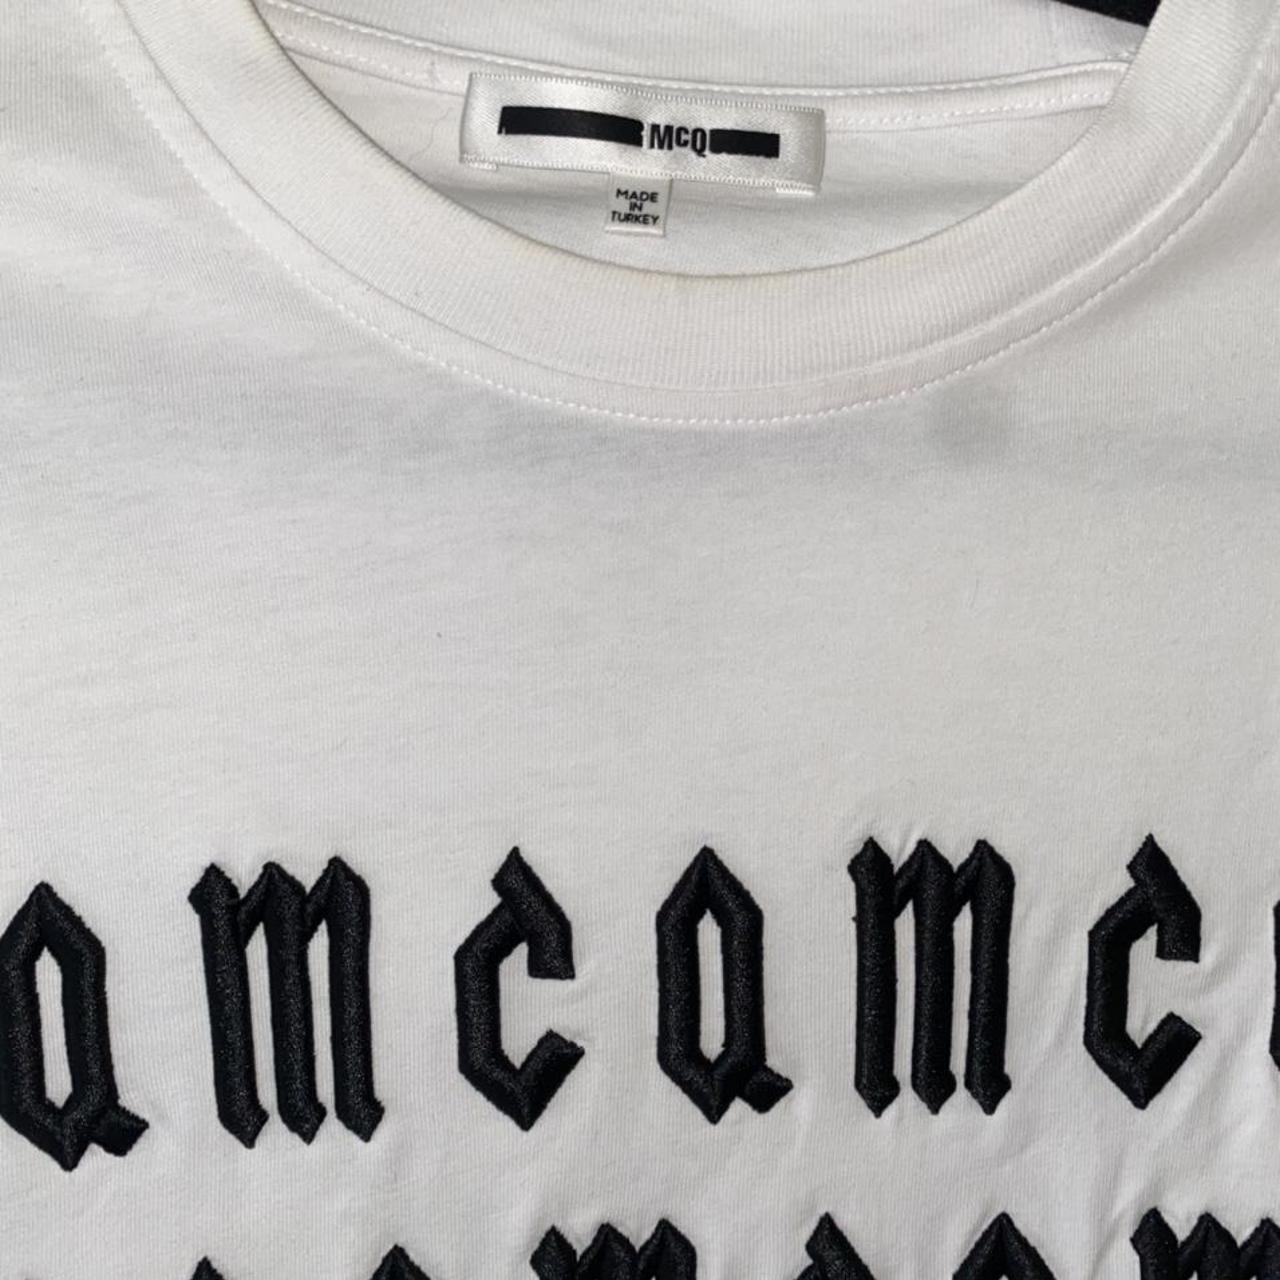 McQ Alexander McQueen Men's Black and White T-shirt (2)